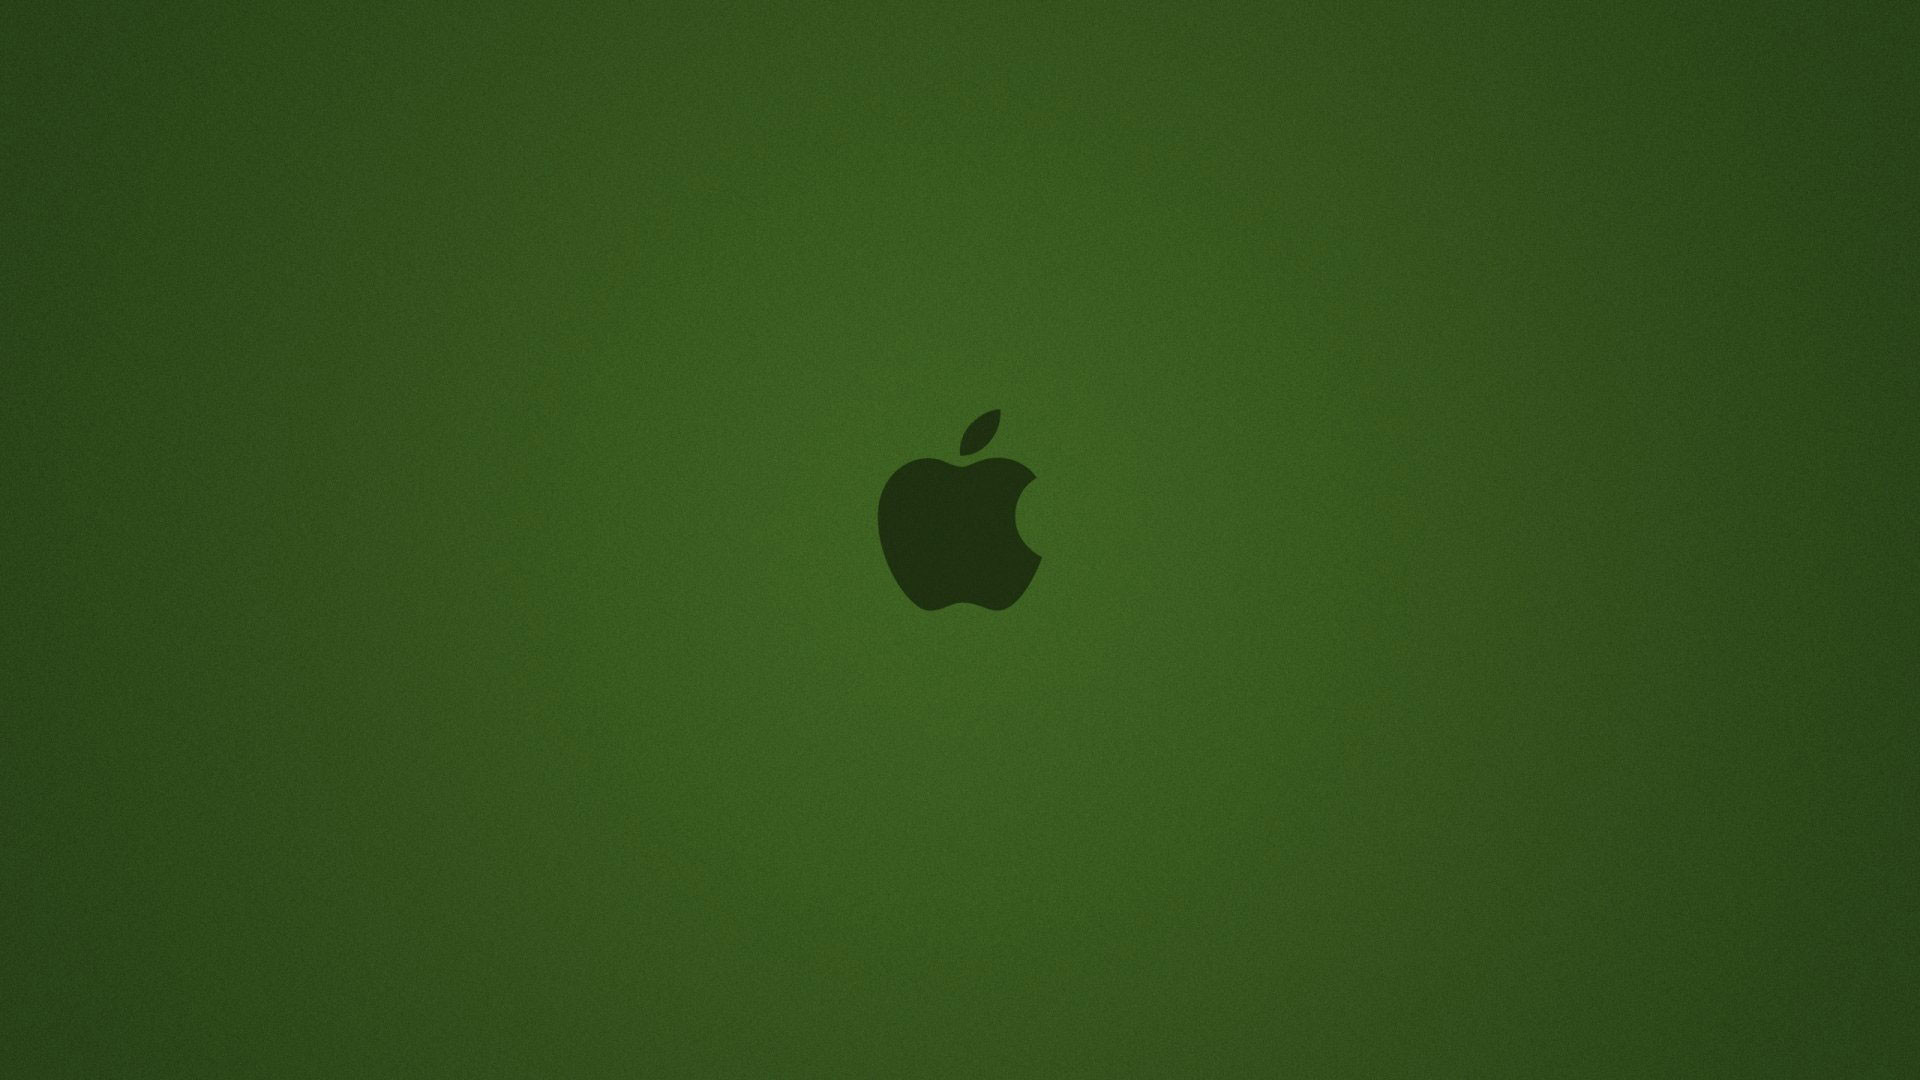 1920x1080 hd pics photos green apple logo dark hd quality desktop background wallpaper